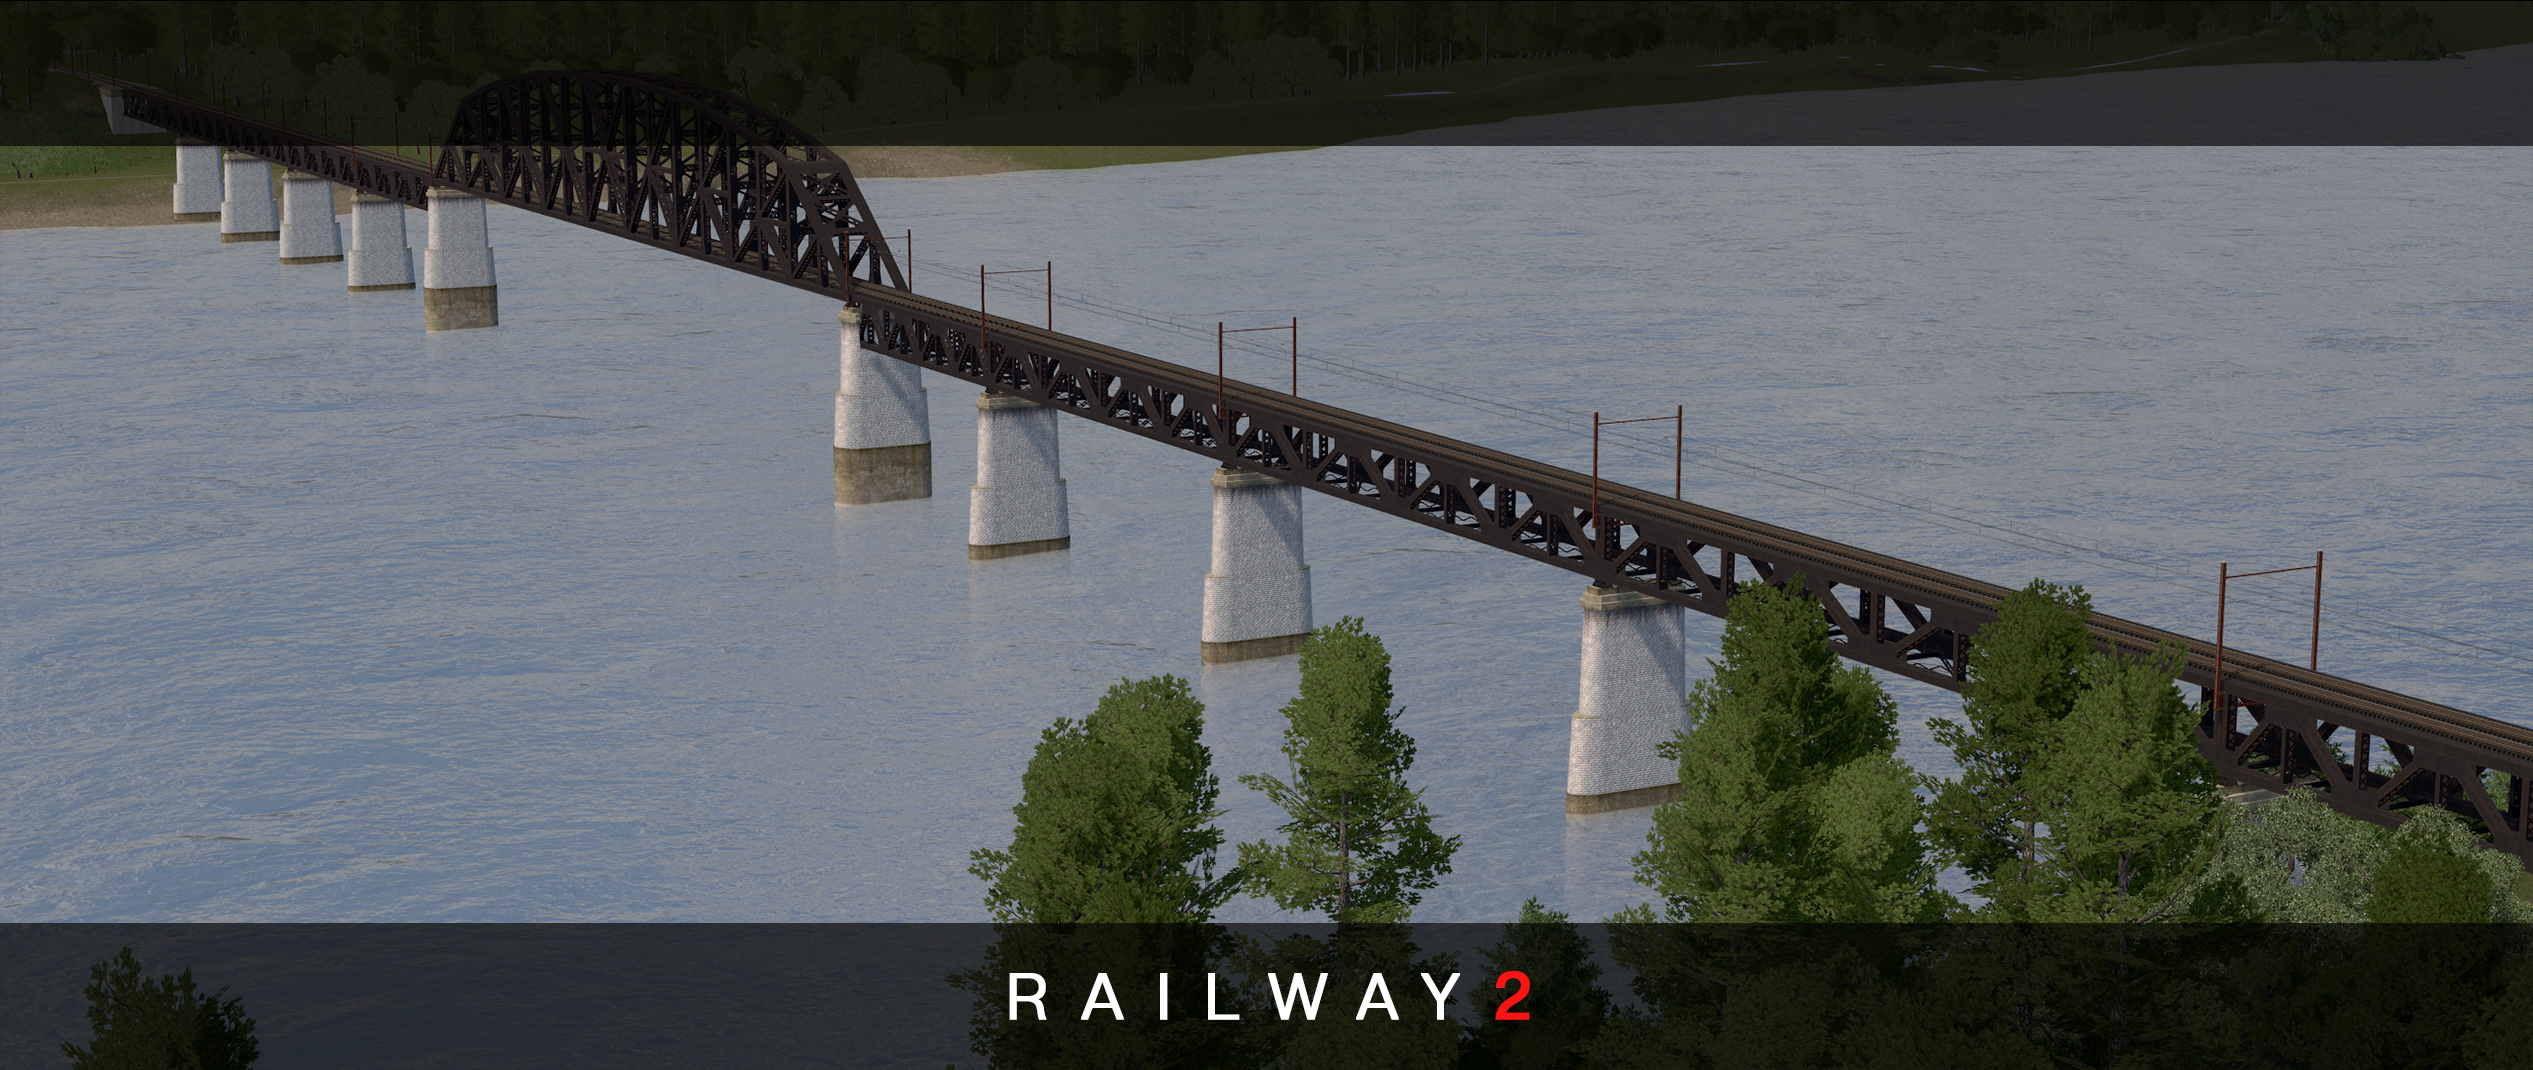 Cities: Skylines List of Railway 2 + Features + Modding Tutorial Information - 5. Bridge Networks - 4F97D7C